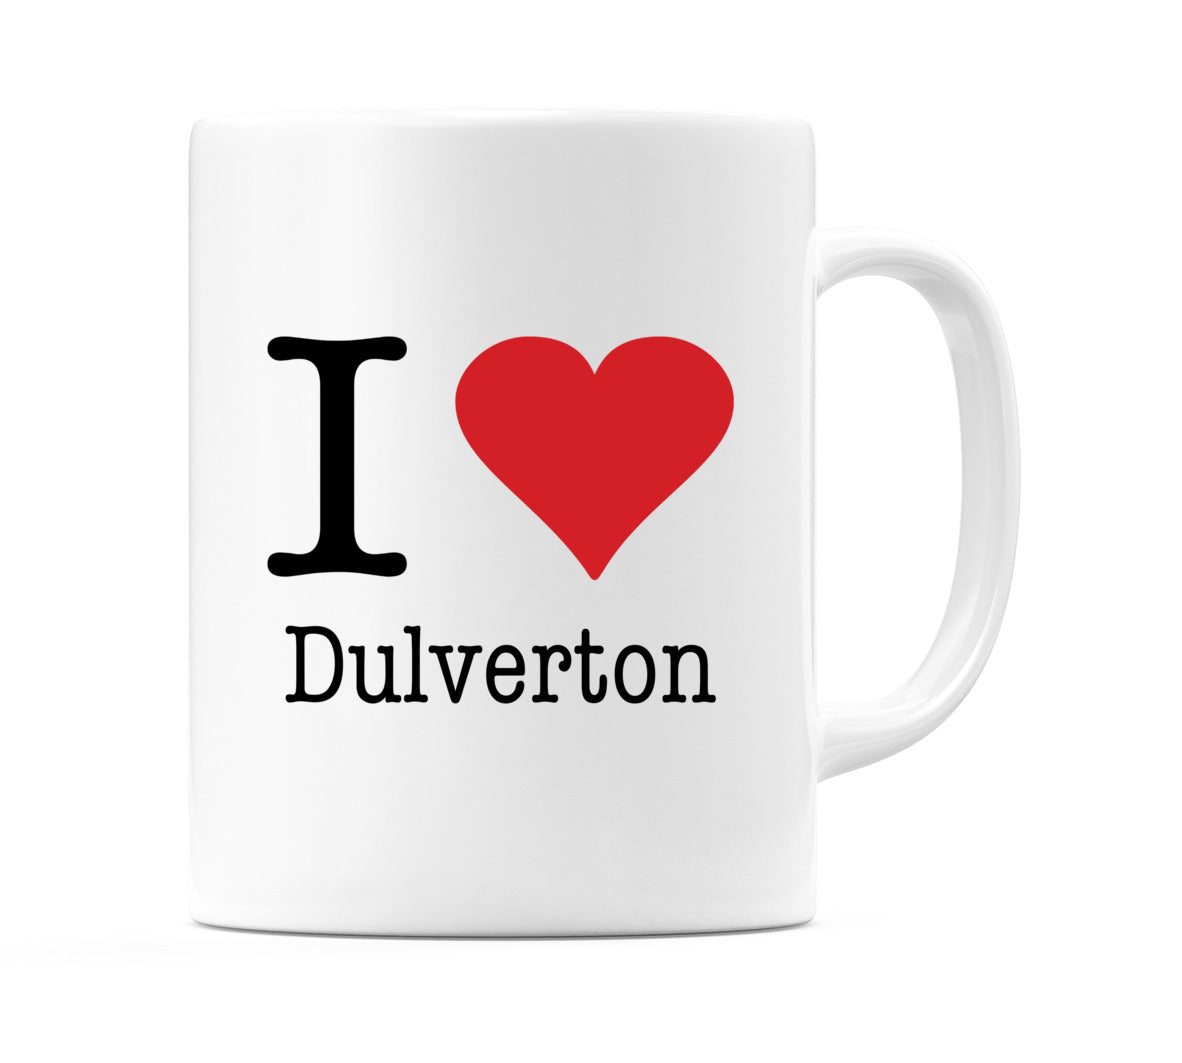 I Love Dulverton Mug